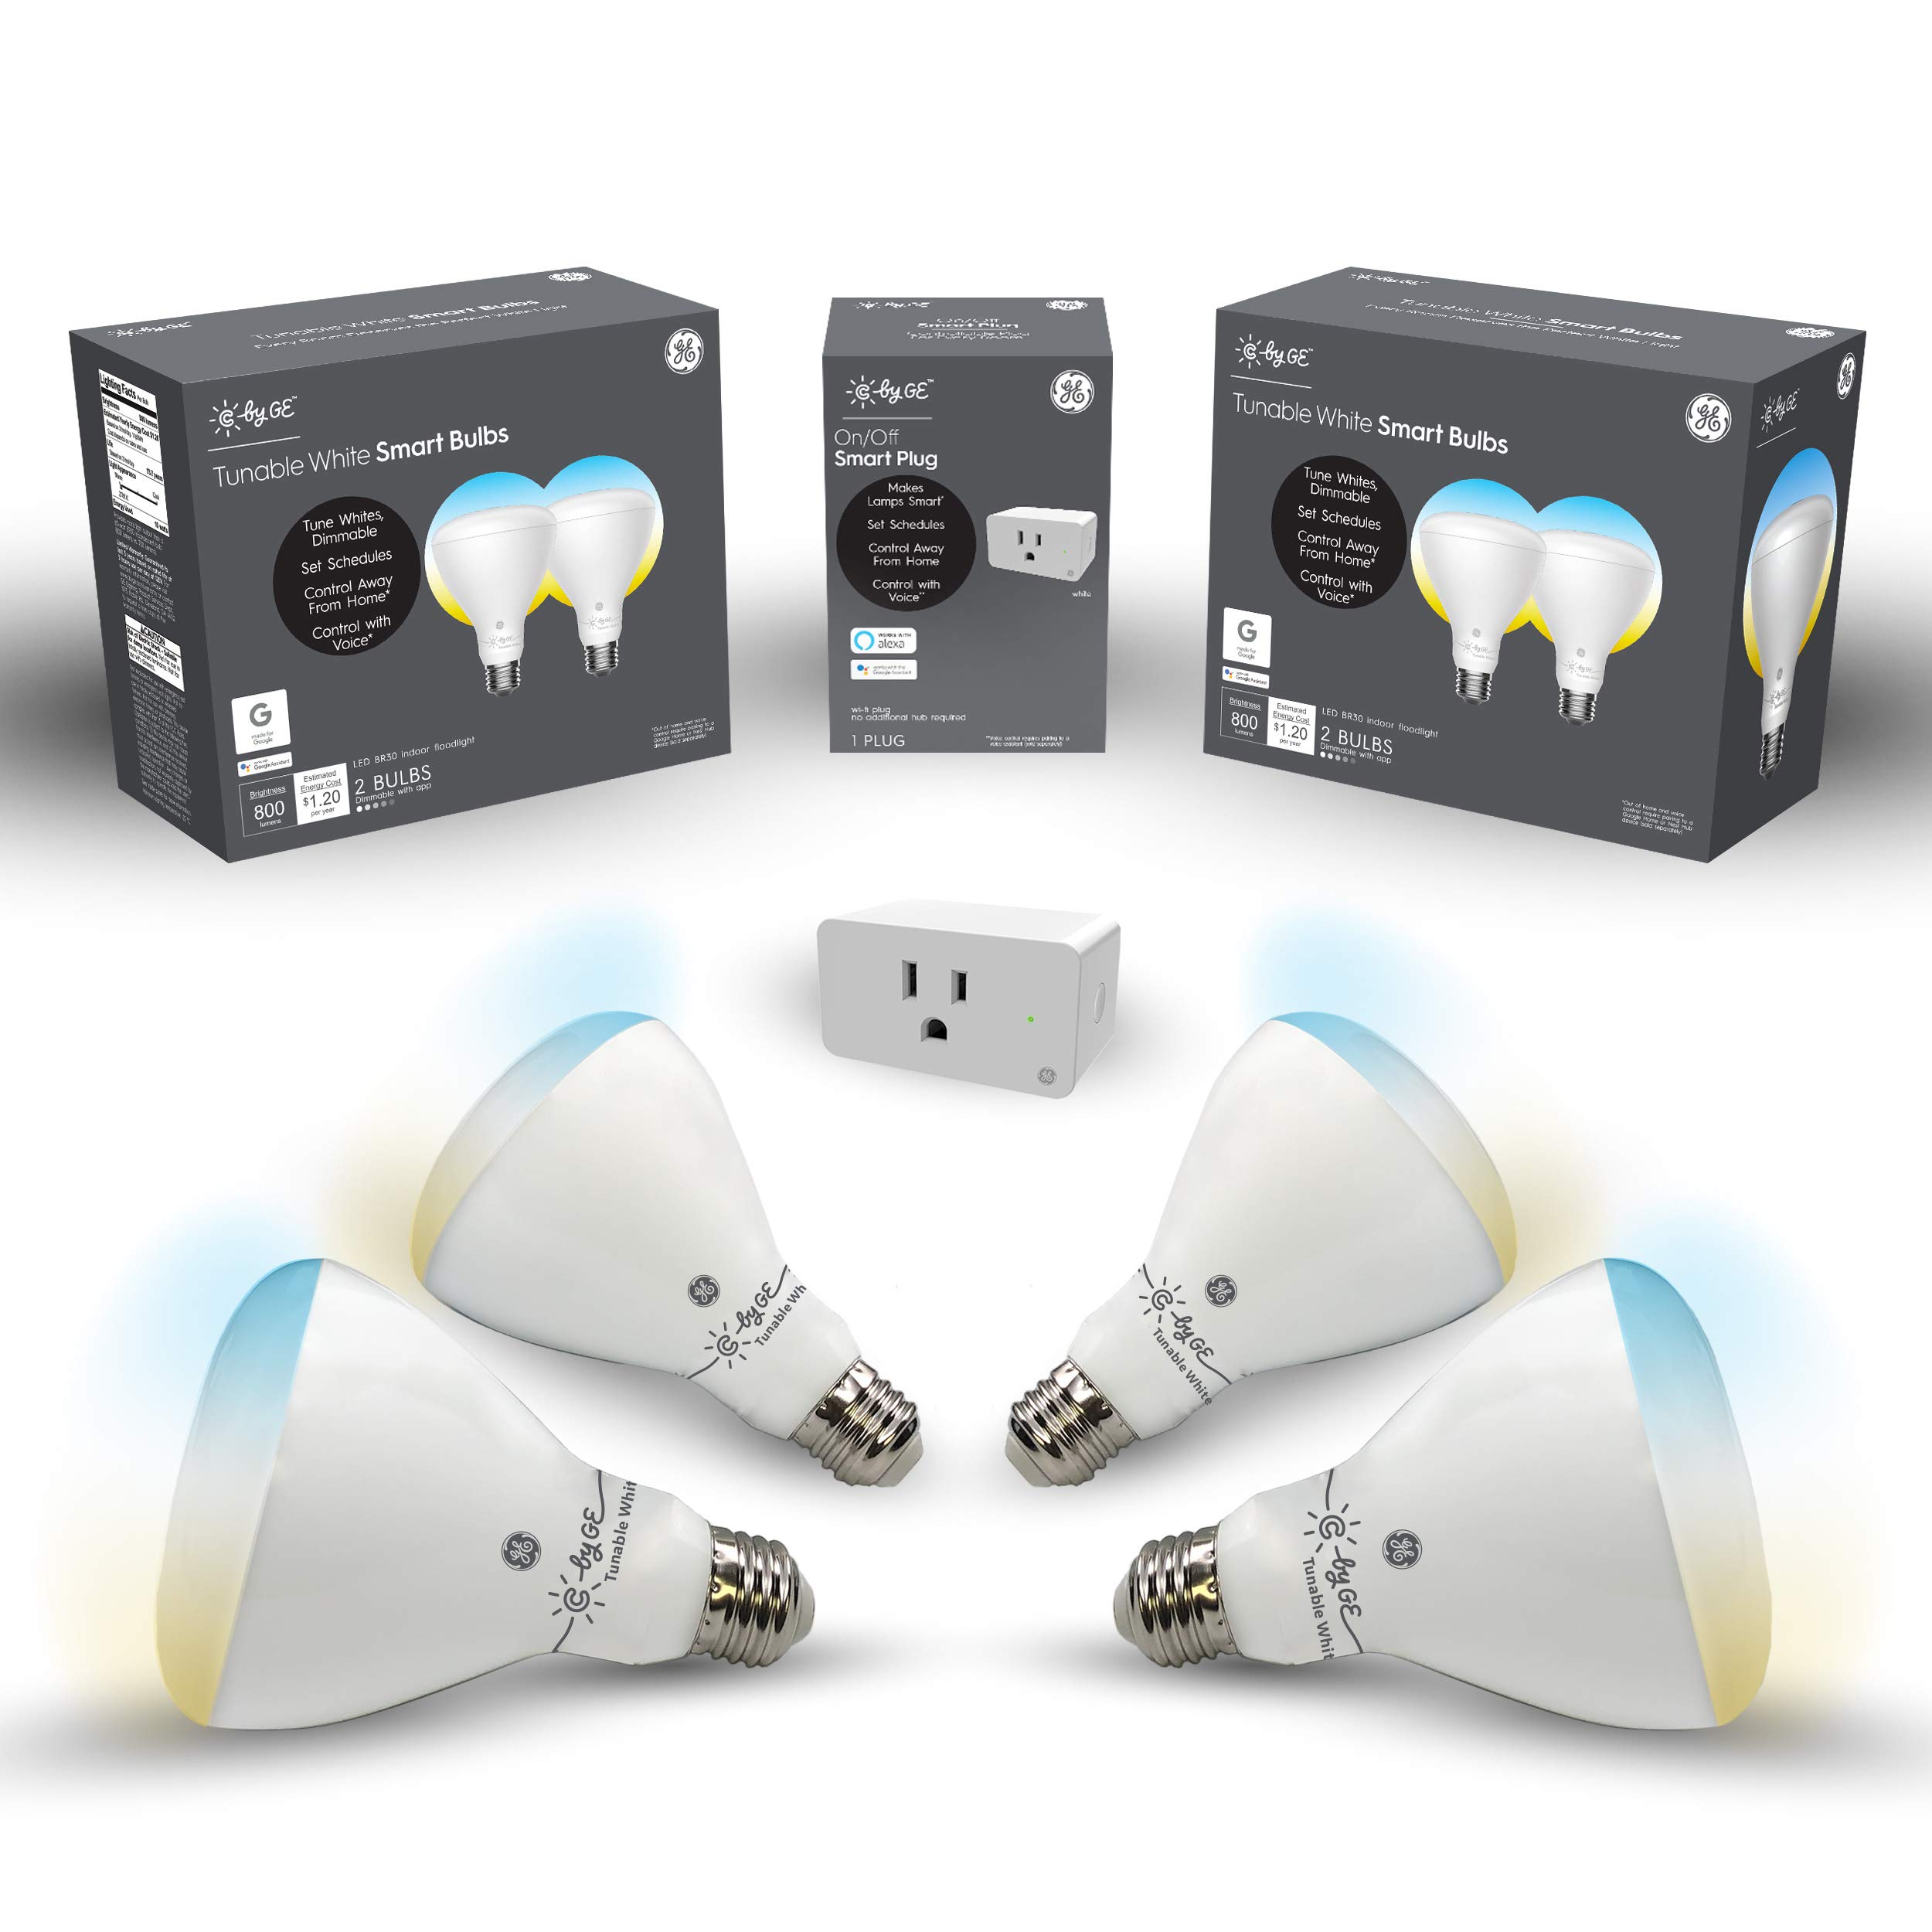 C by GE Smart Bundle Pack with 4 Smart Bulbs and Smart Plug (4 LED BR30 Tunable White Bulbs + On/Off Smart Plug), Works with Alexa and Google Assis...